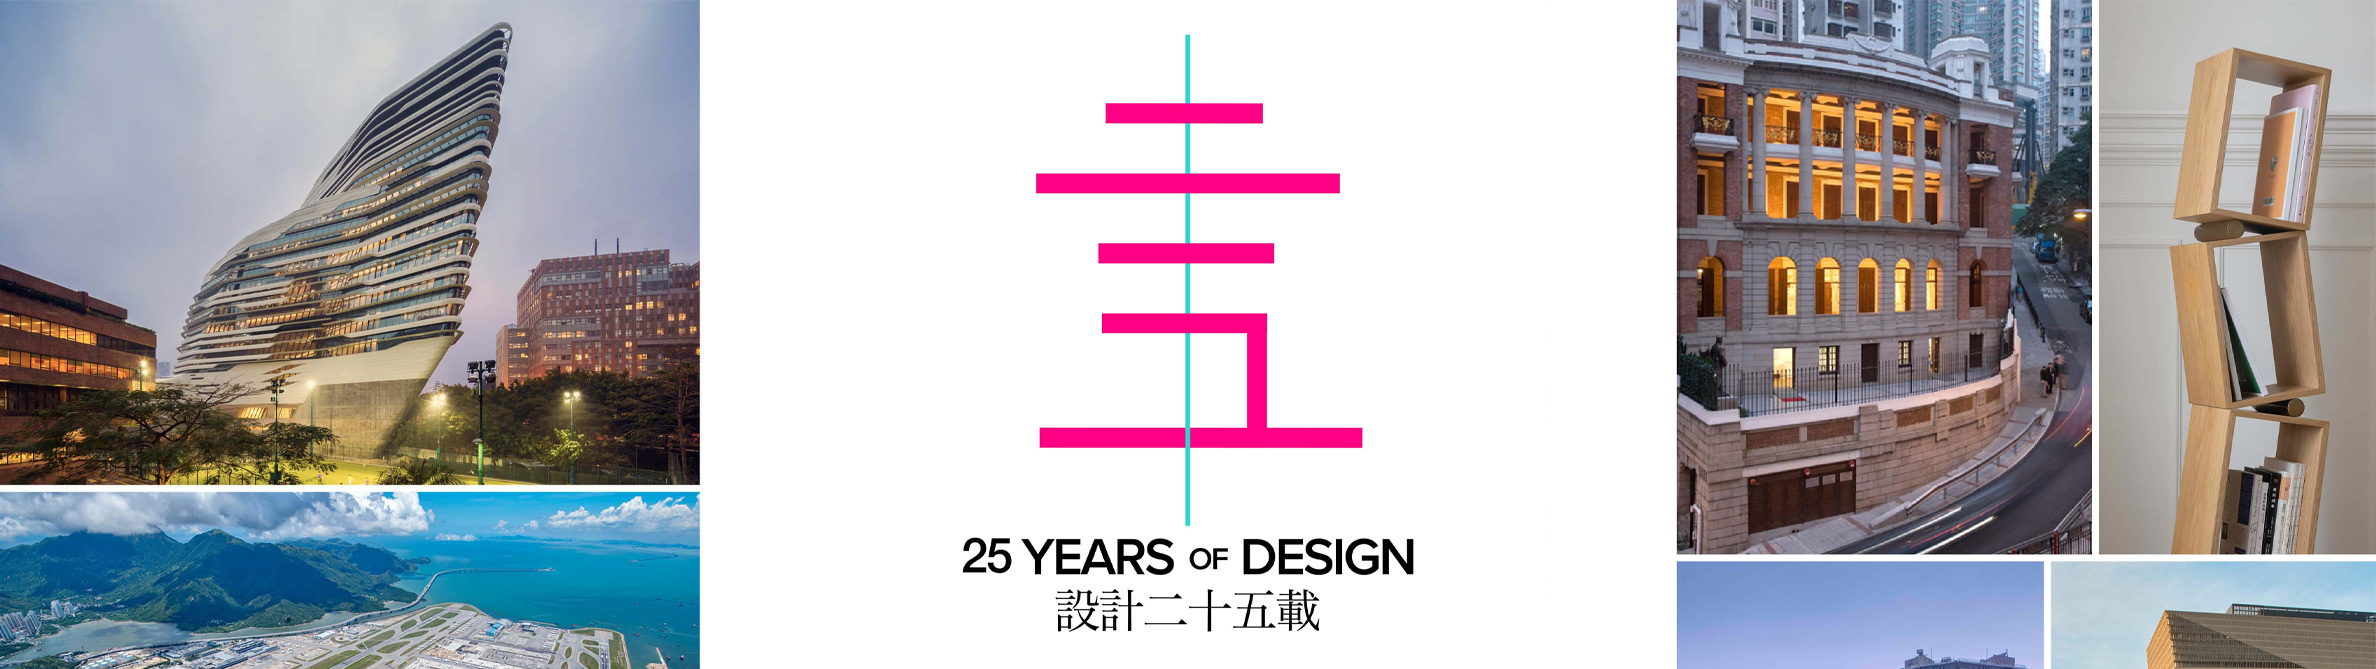 25 YEARS OF DESIGN